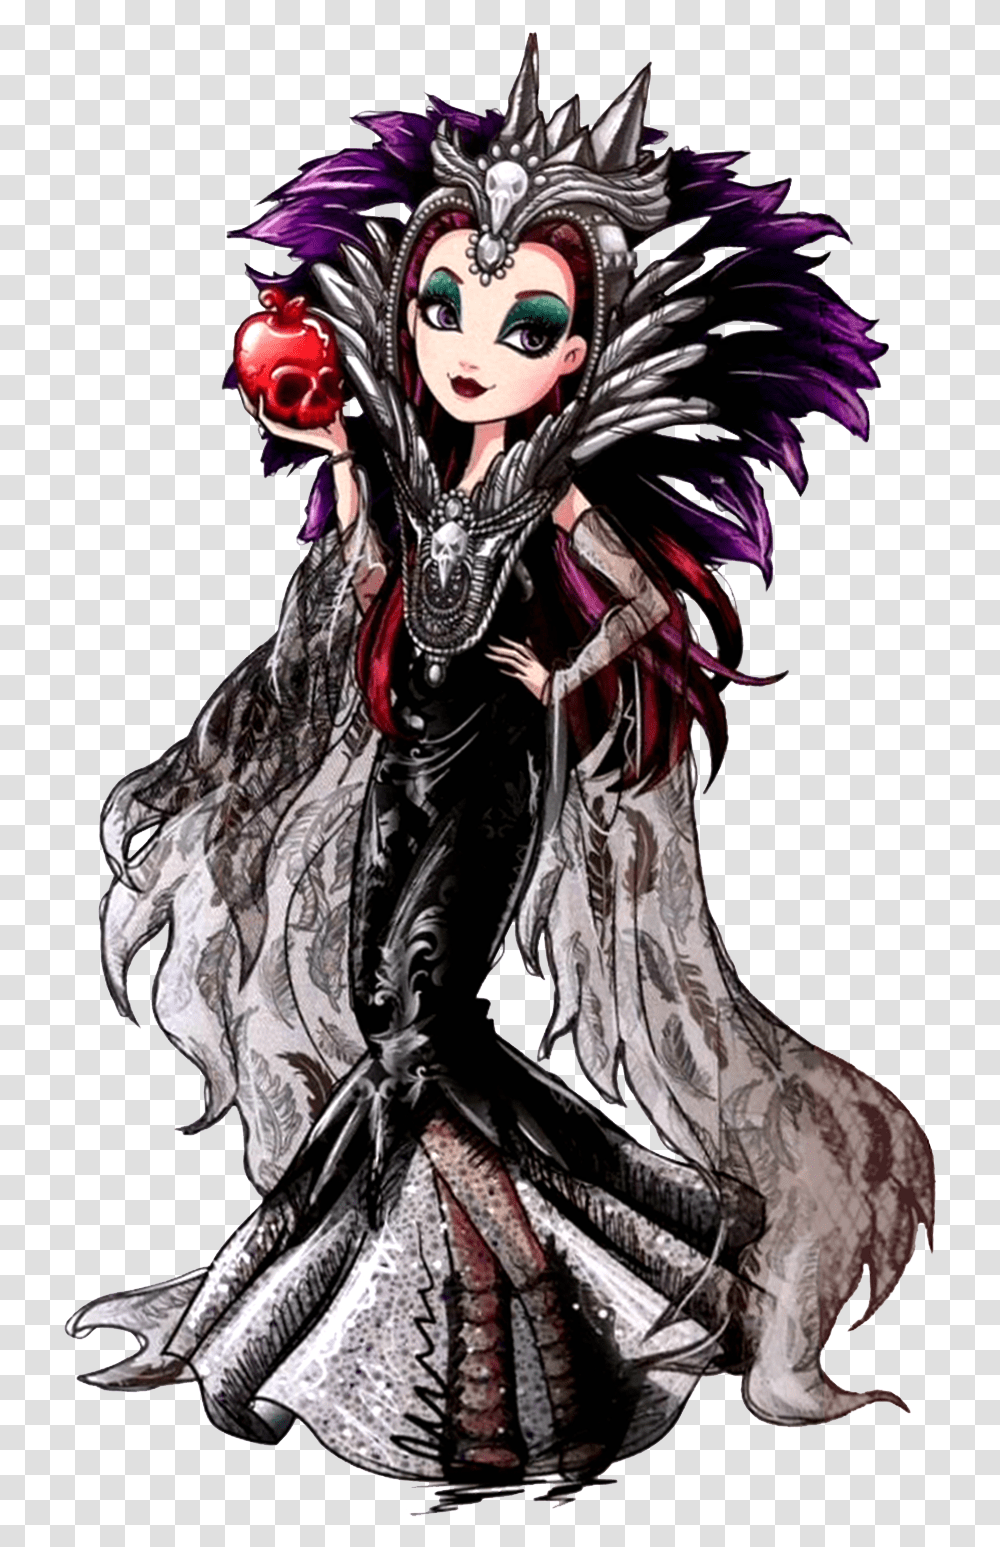 Raven Queen Spellbinding Raven Queen Doll Full Size Ever After High Spellbinding Raven Queen, Manga, Comics, Book, Person Transparent Png